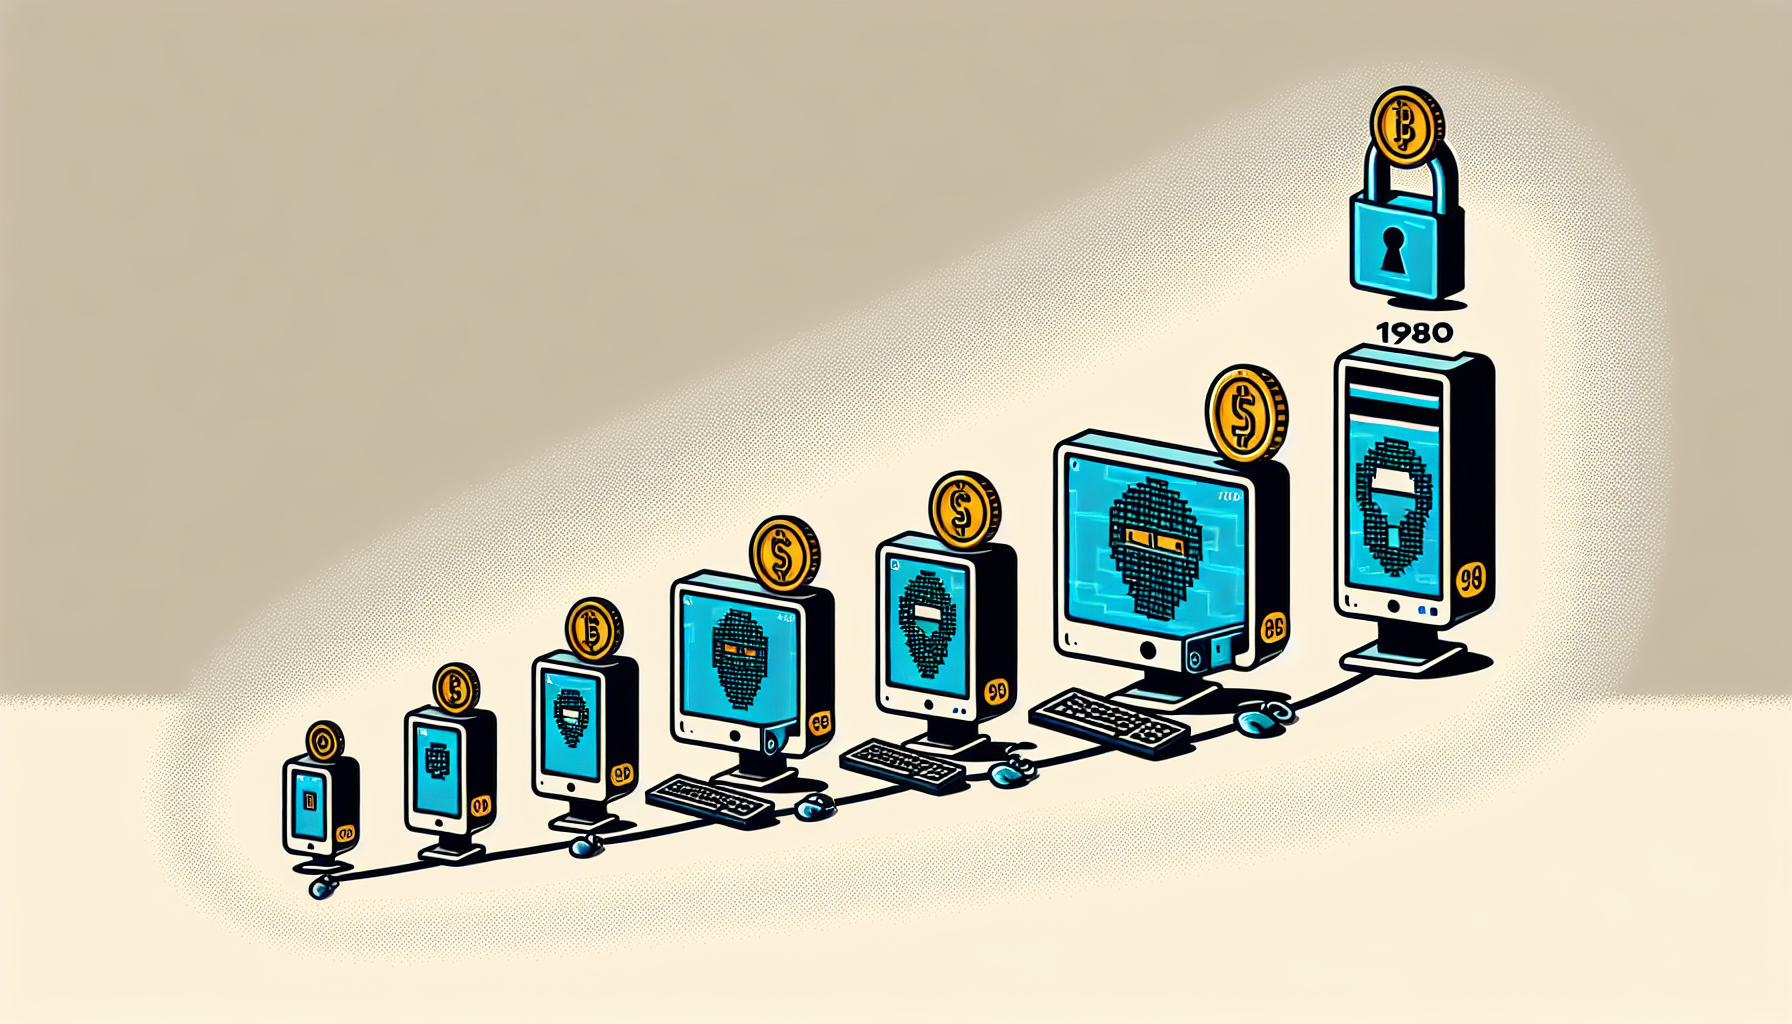 Illustration depicting the evolution of ransomware attacks